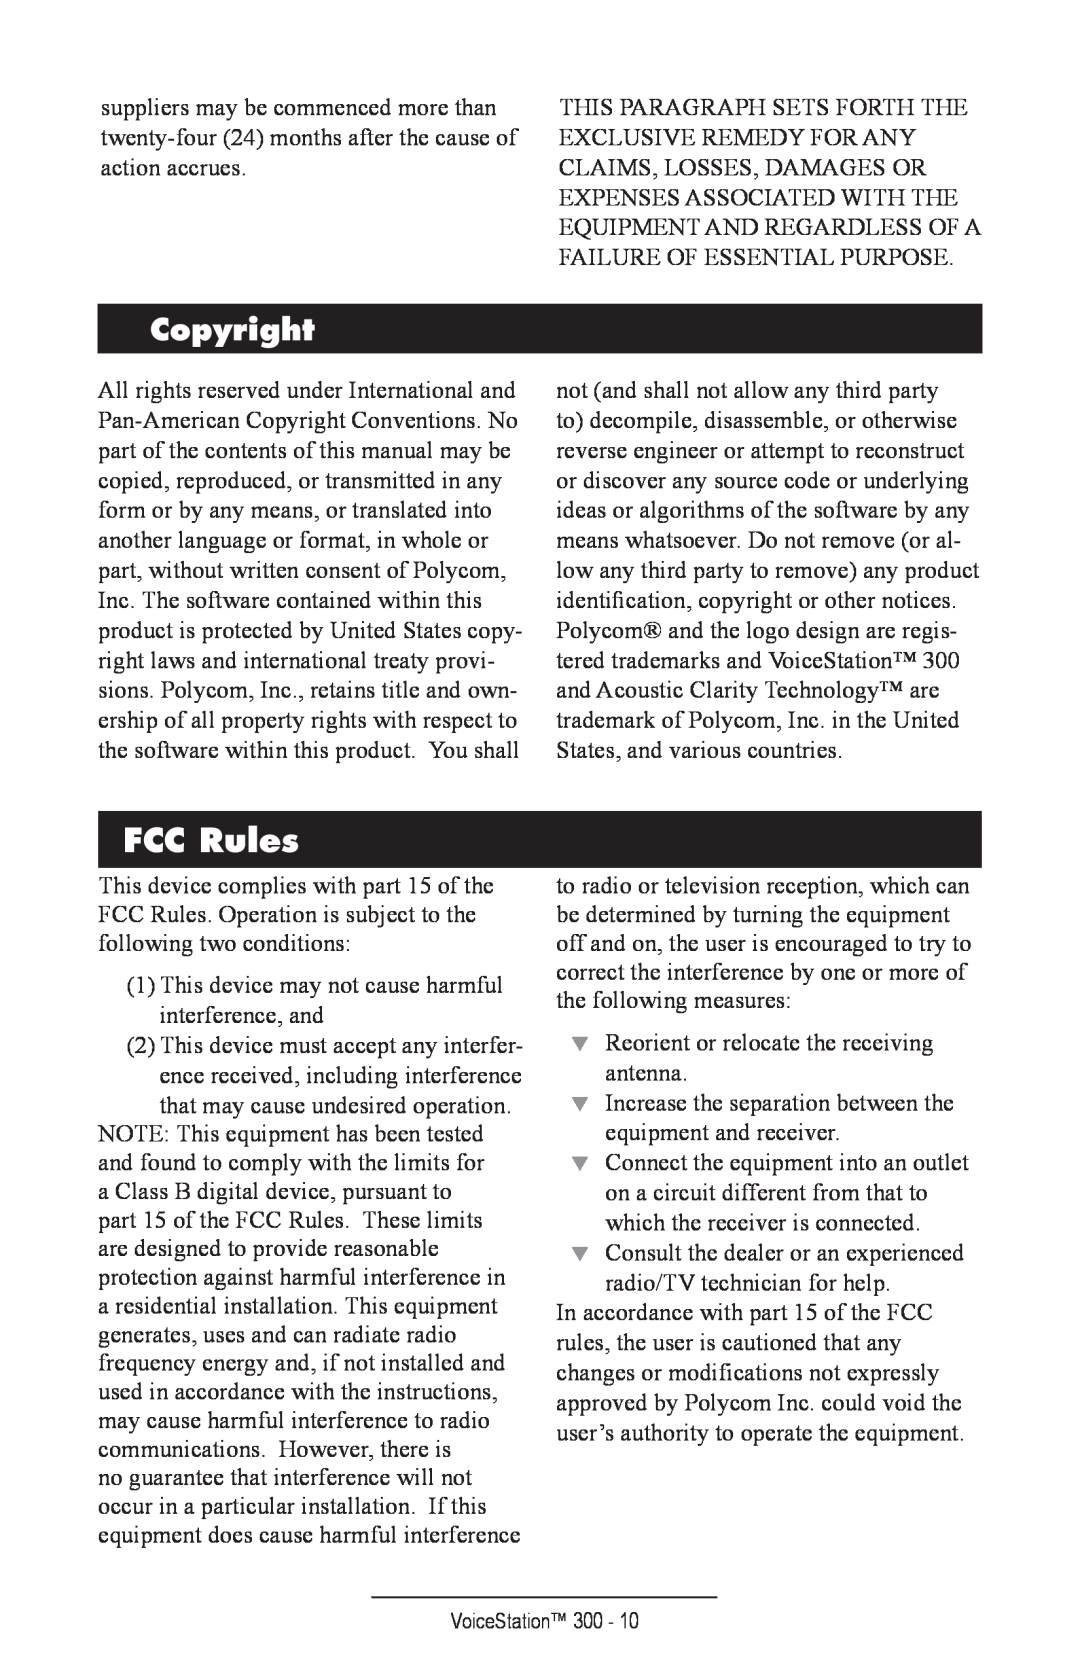 Polycom TM300 manual Copyright, FCC Rules 